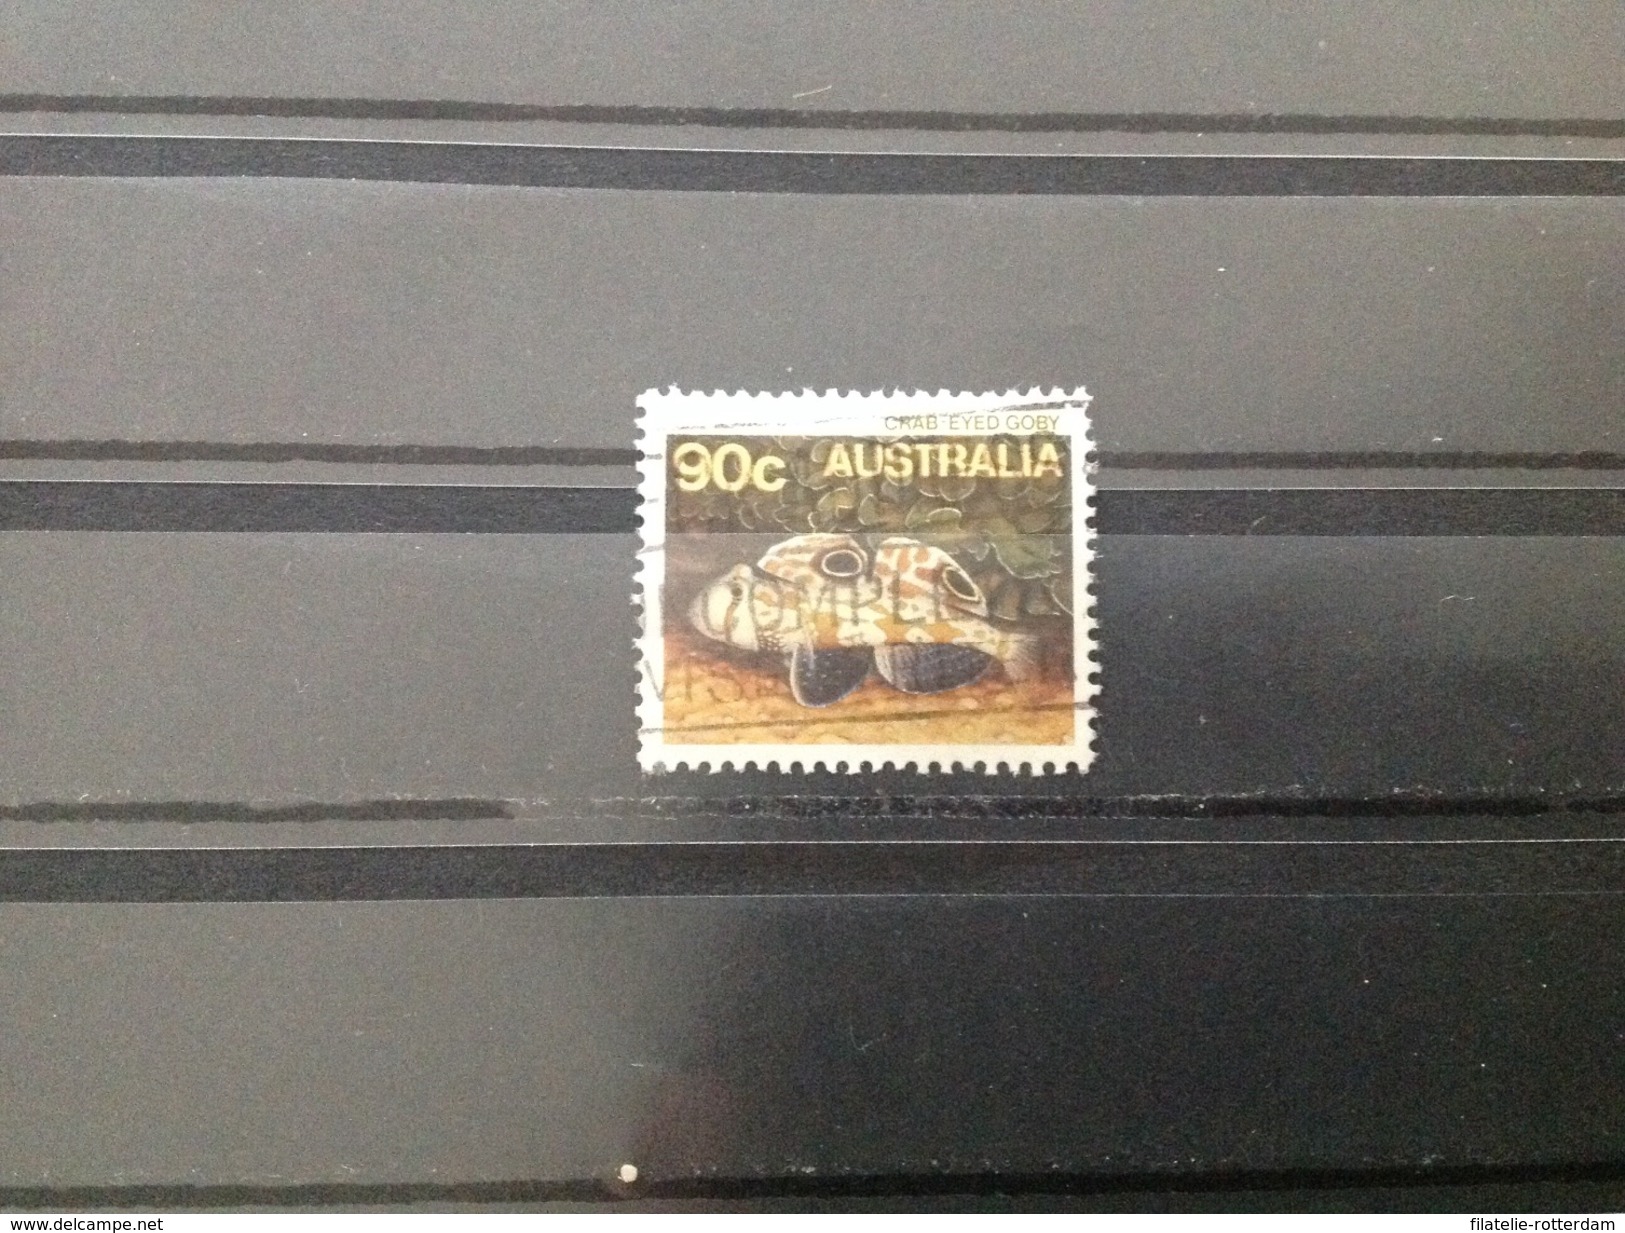 Australië / Australia - Vissen (90) 1985 - Gebruikt